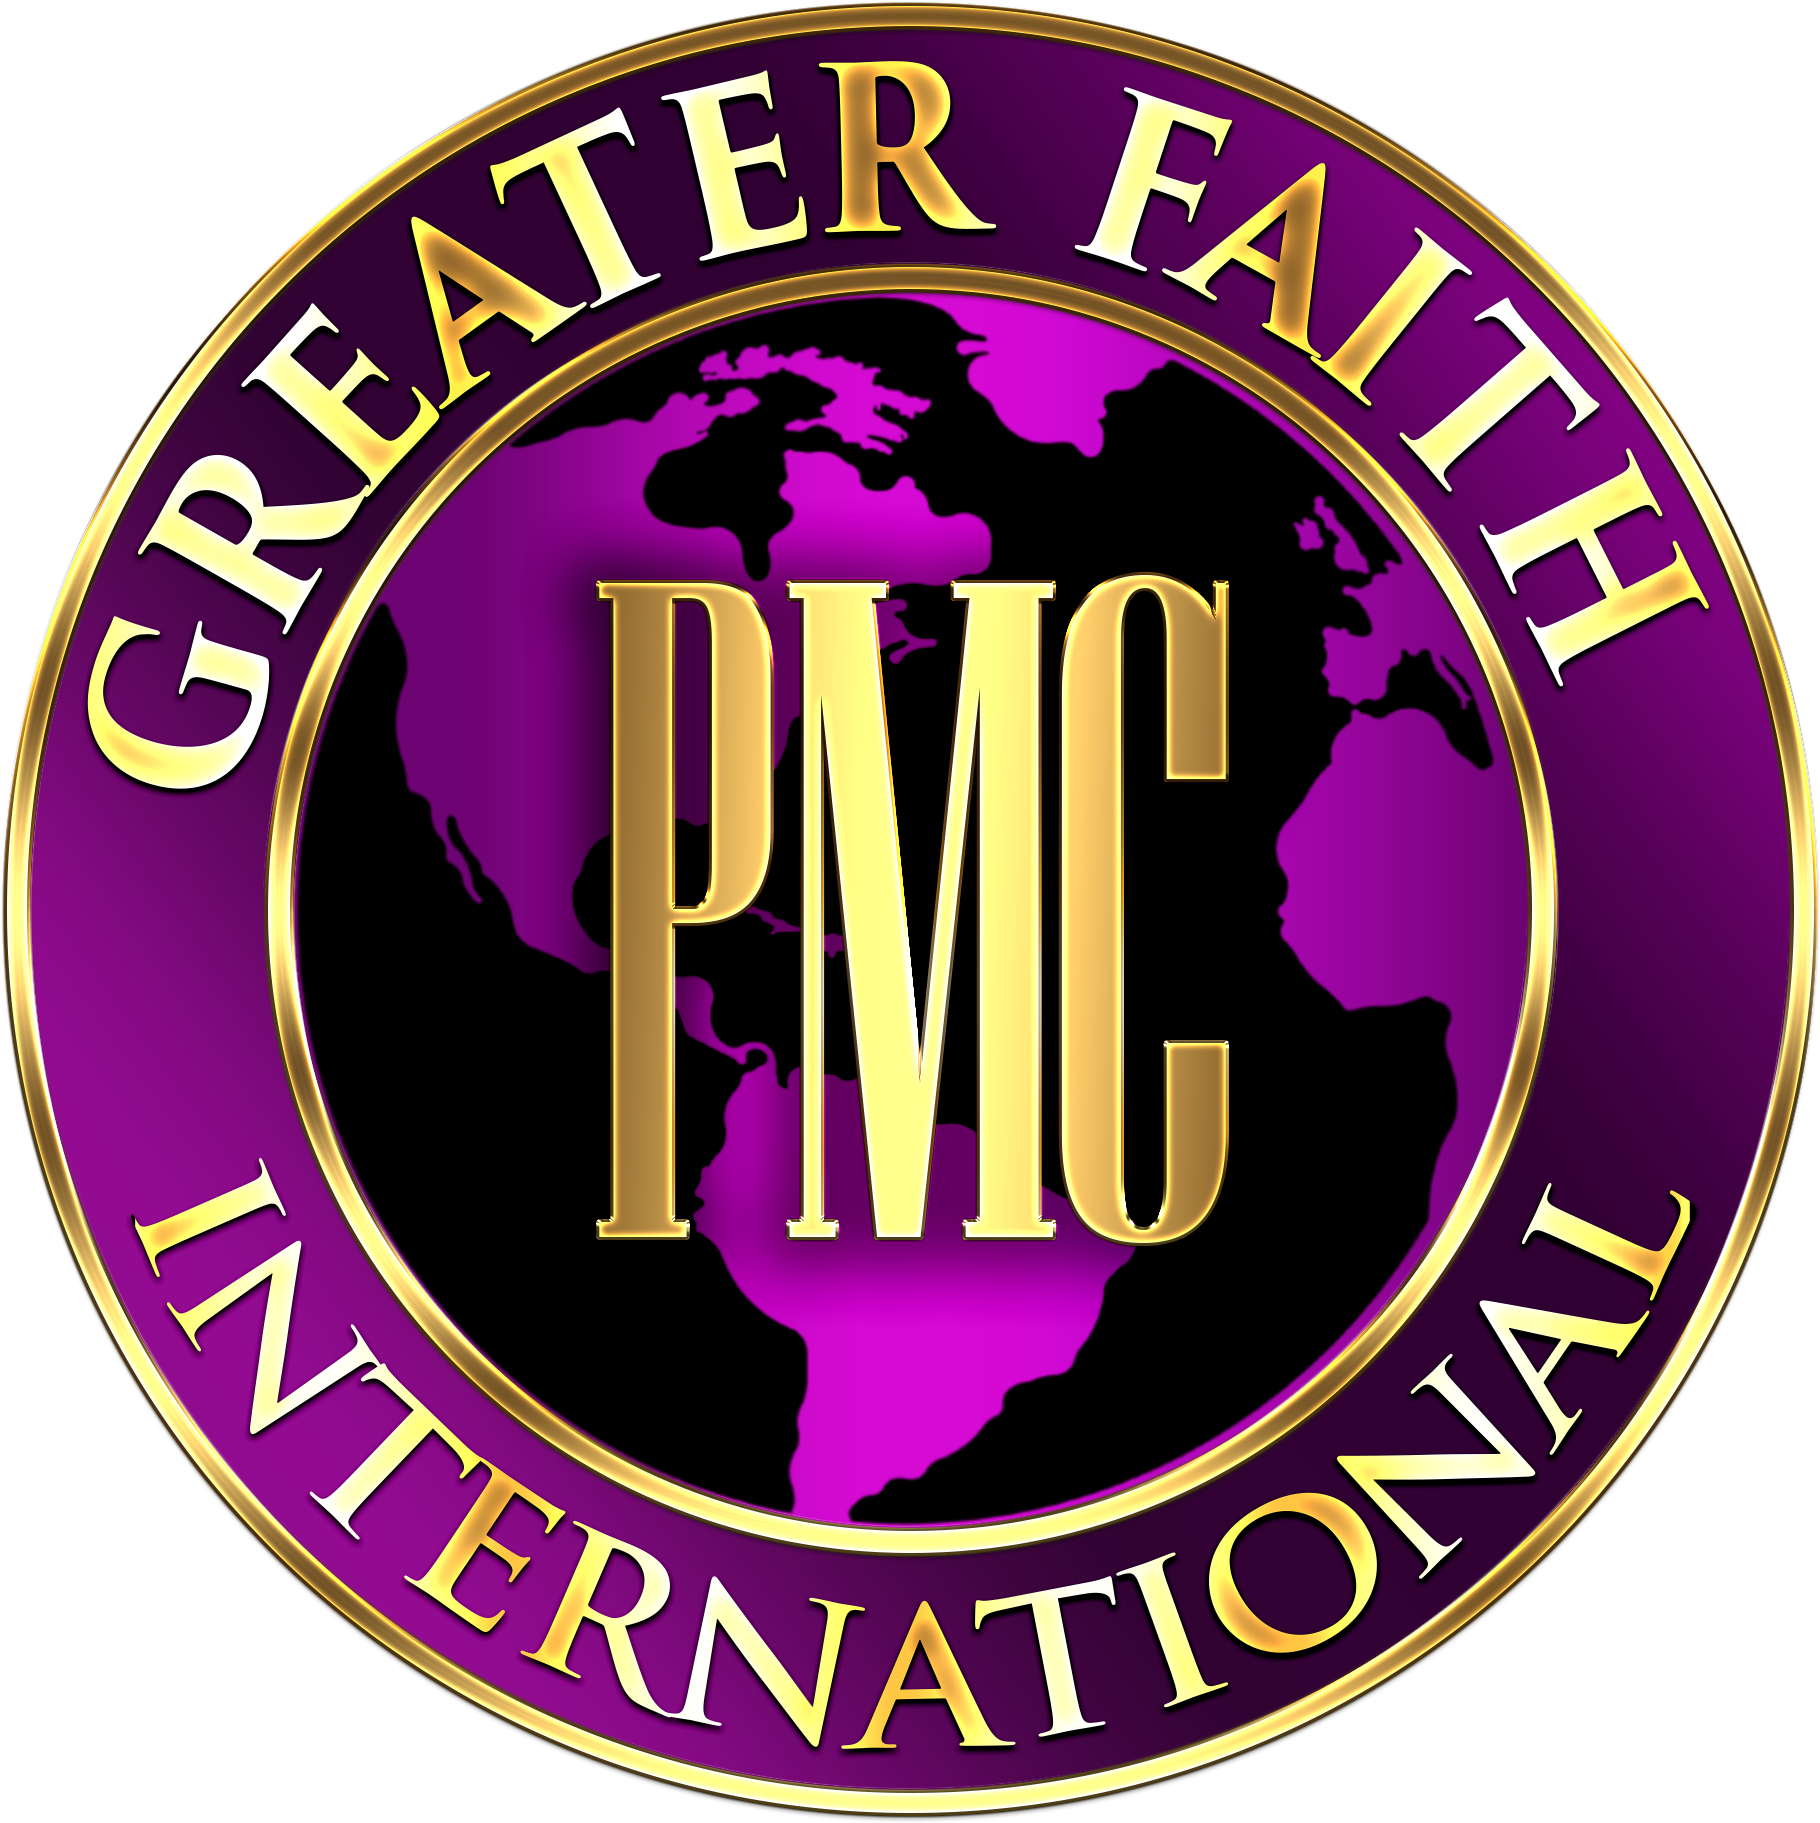 Circle Logo Pmc - Perry Hiway Hose Company (2400x2400)